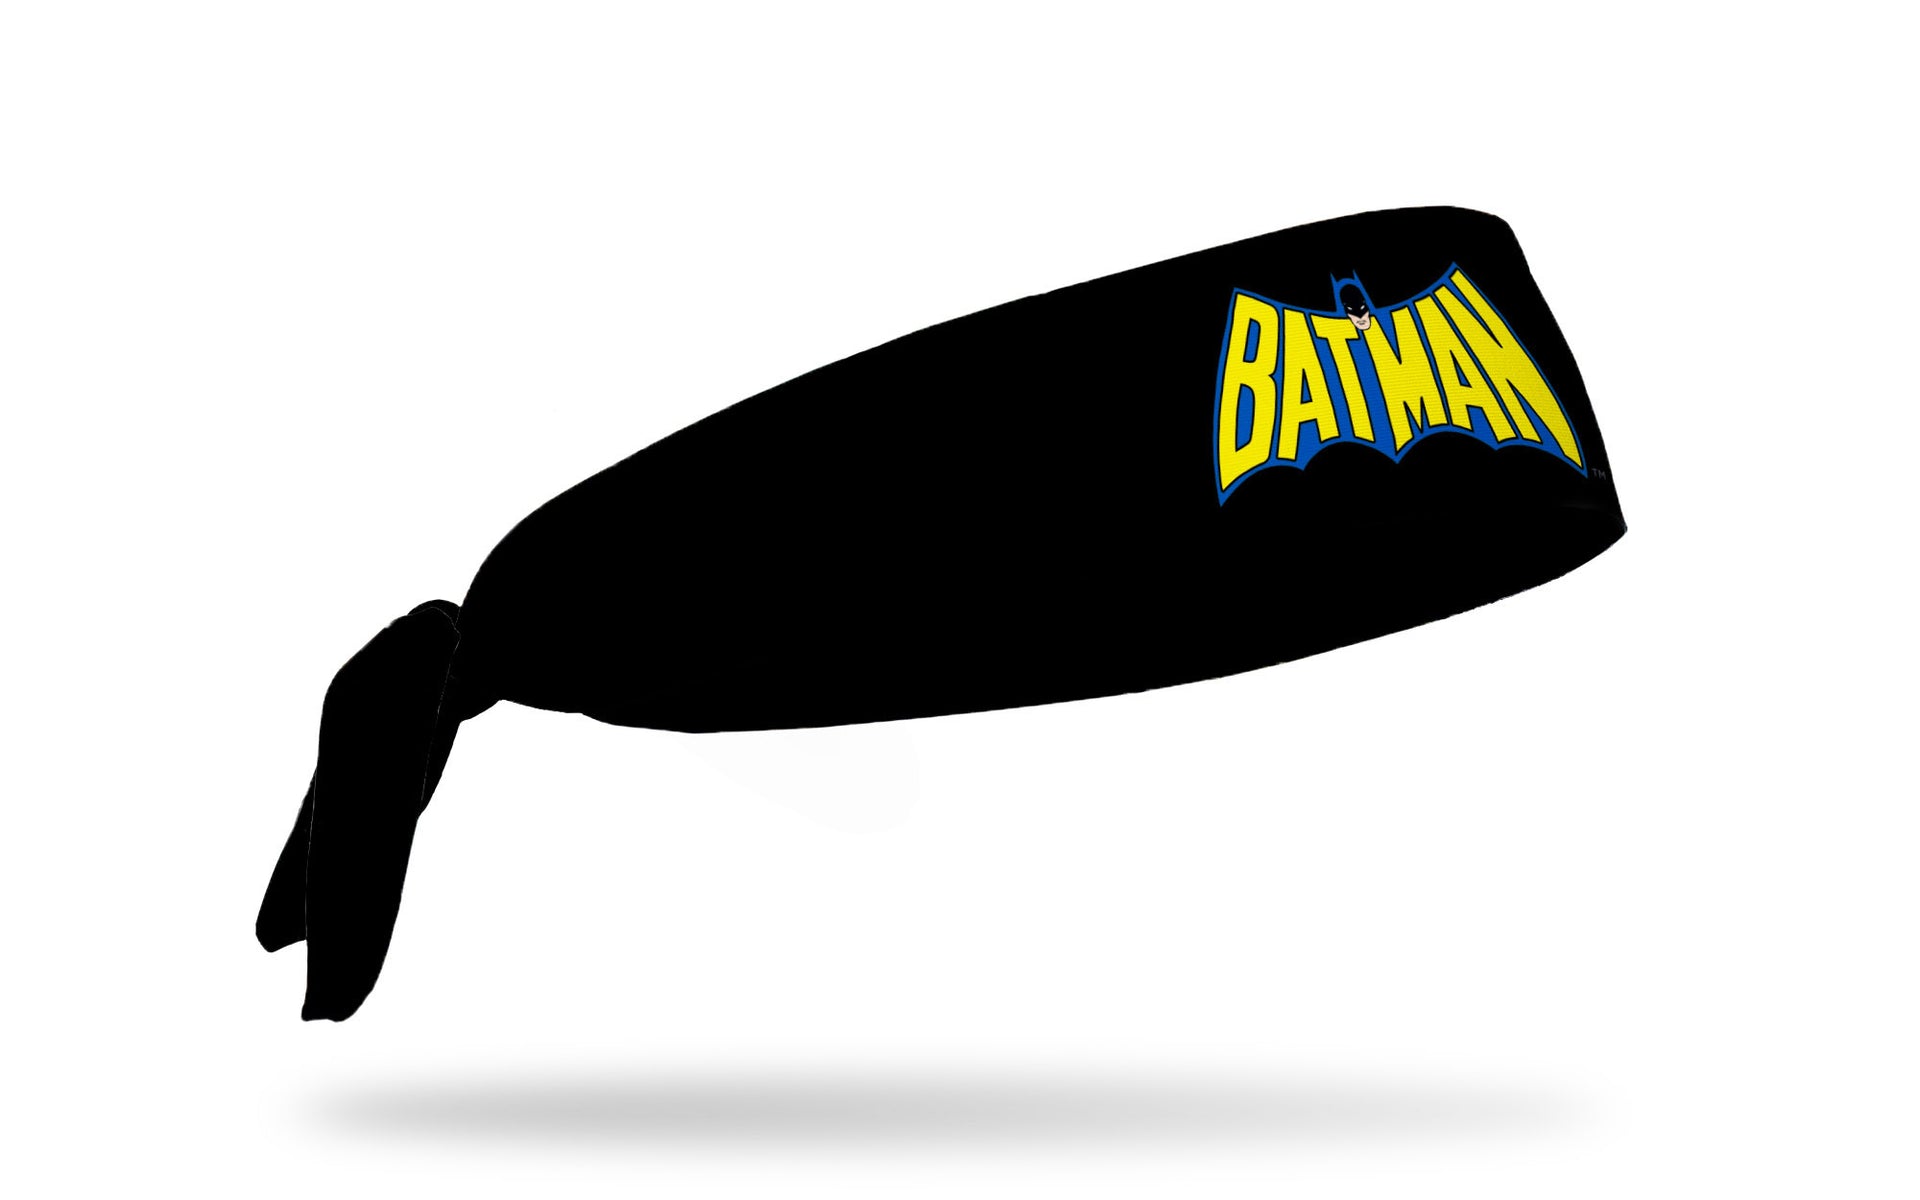 DC Classic Batman Wordmark logo full color on black headband